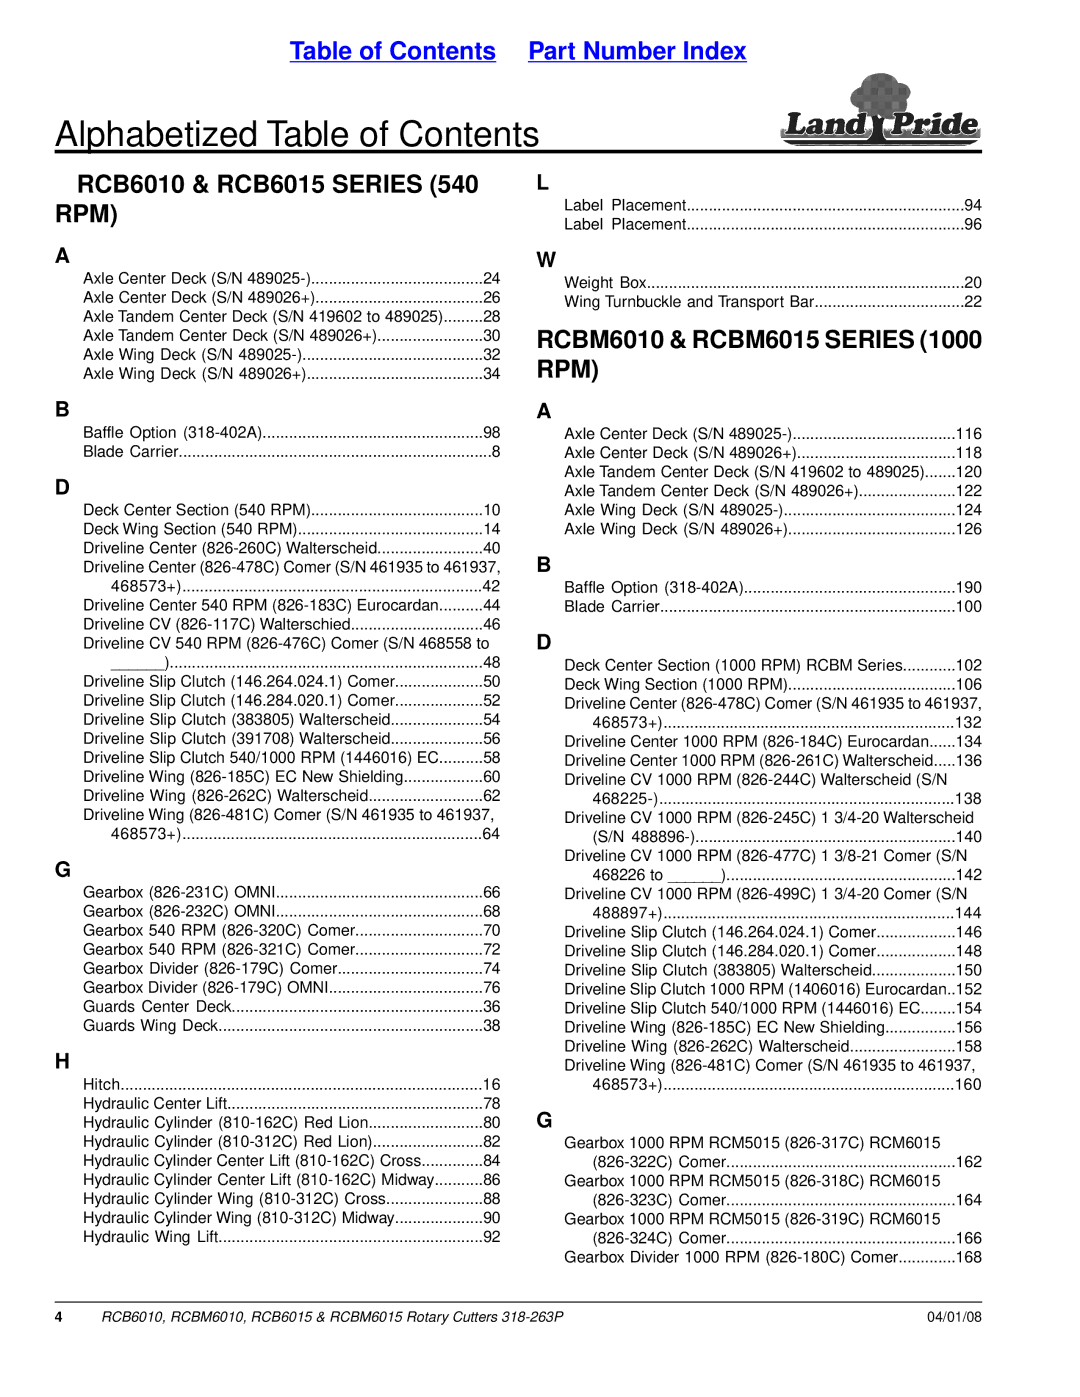 Land Pride RCBM6015, RCB6015, RCB6010, RCBM6010 manual Alphabetized Table of Contents 